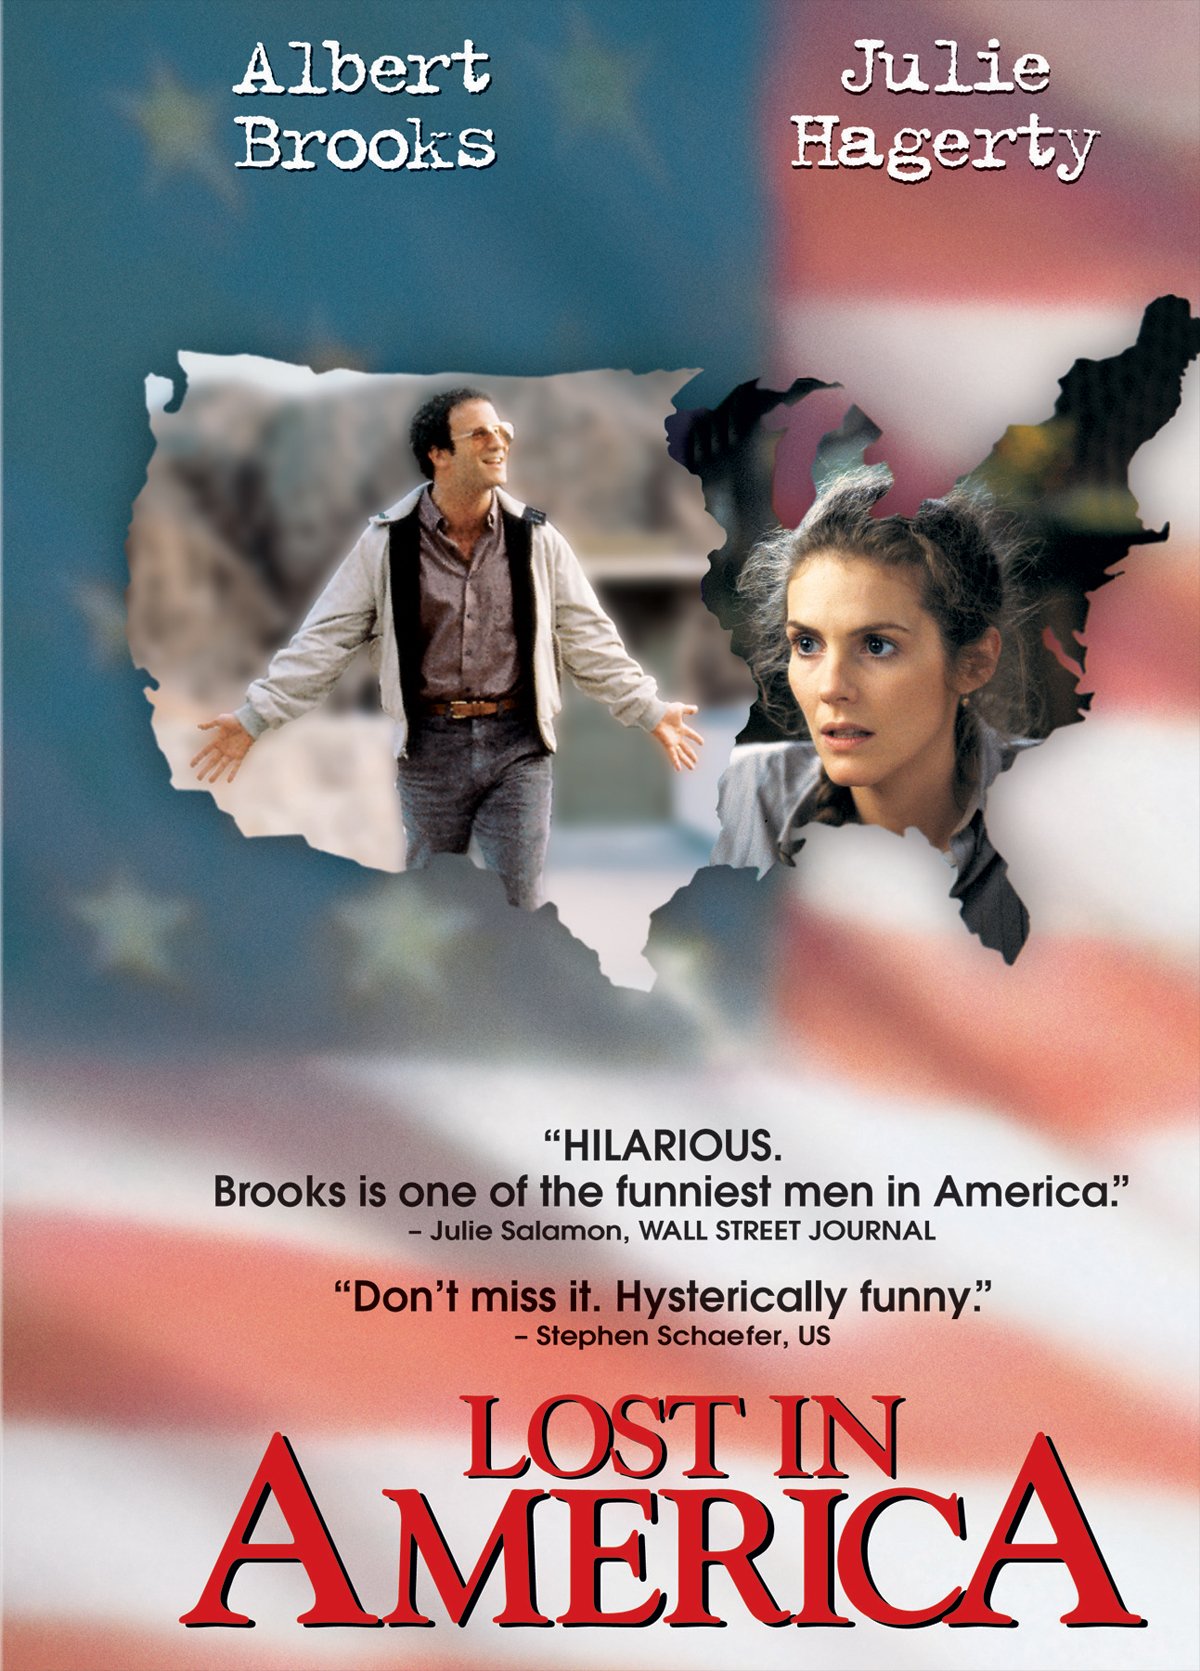 Amazon.com: Lost in America: Albert Brooks, Julie Hagerty, Michael ...